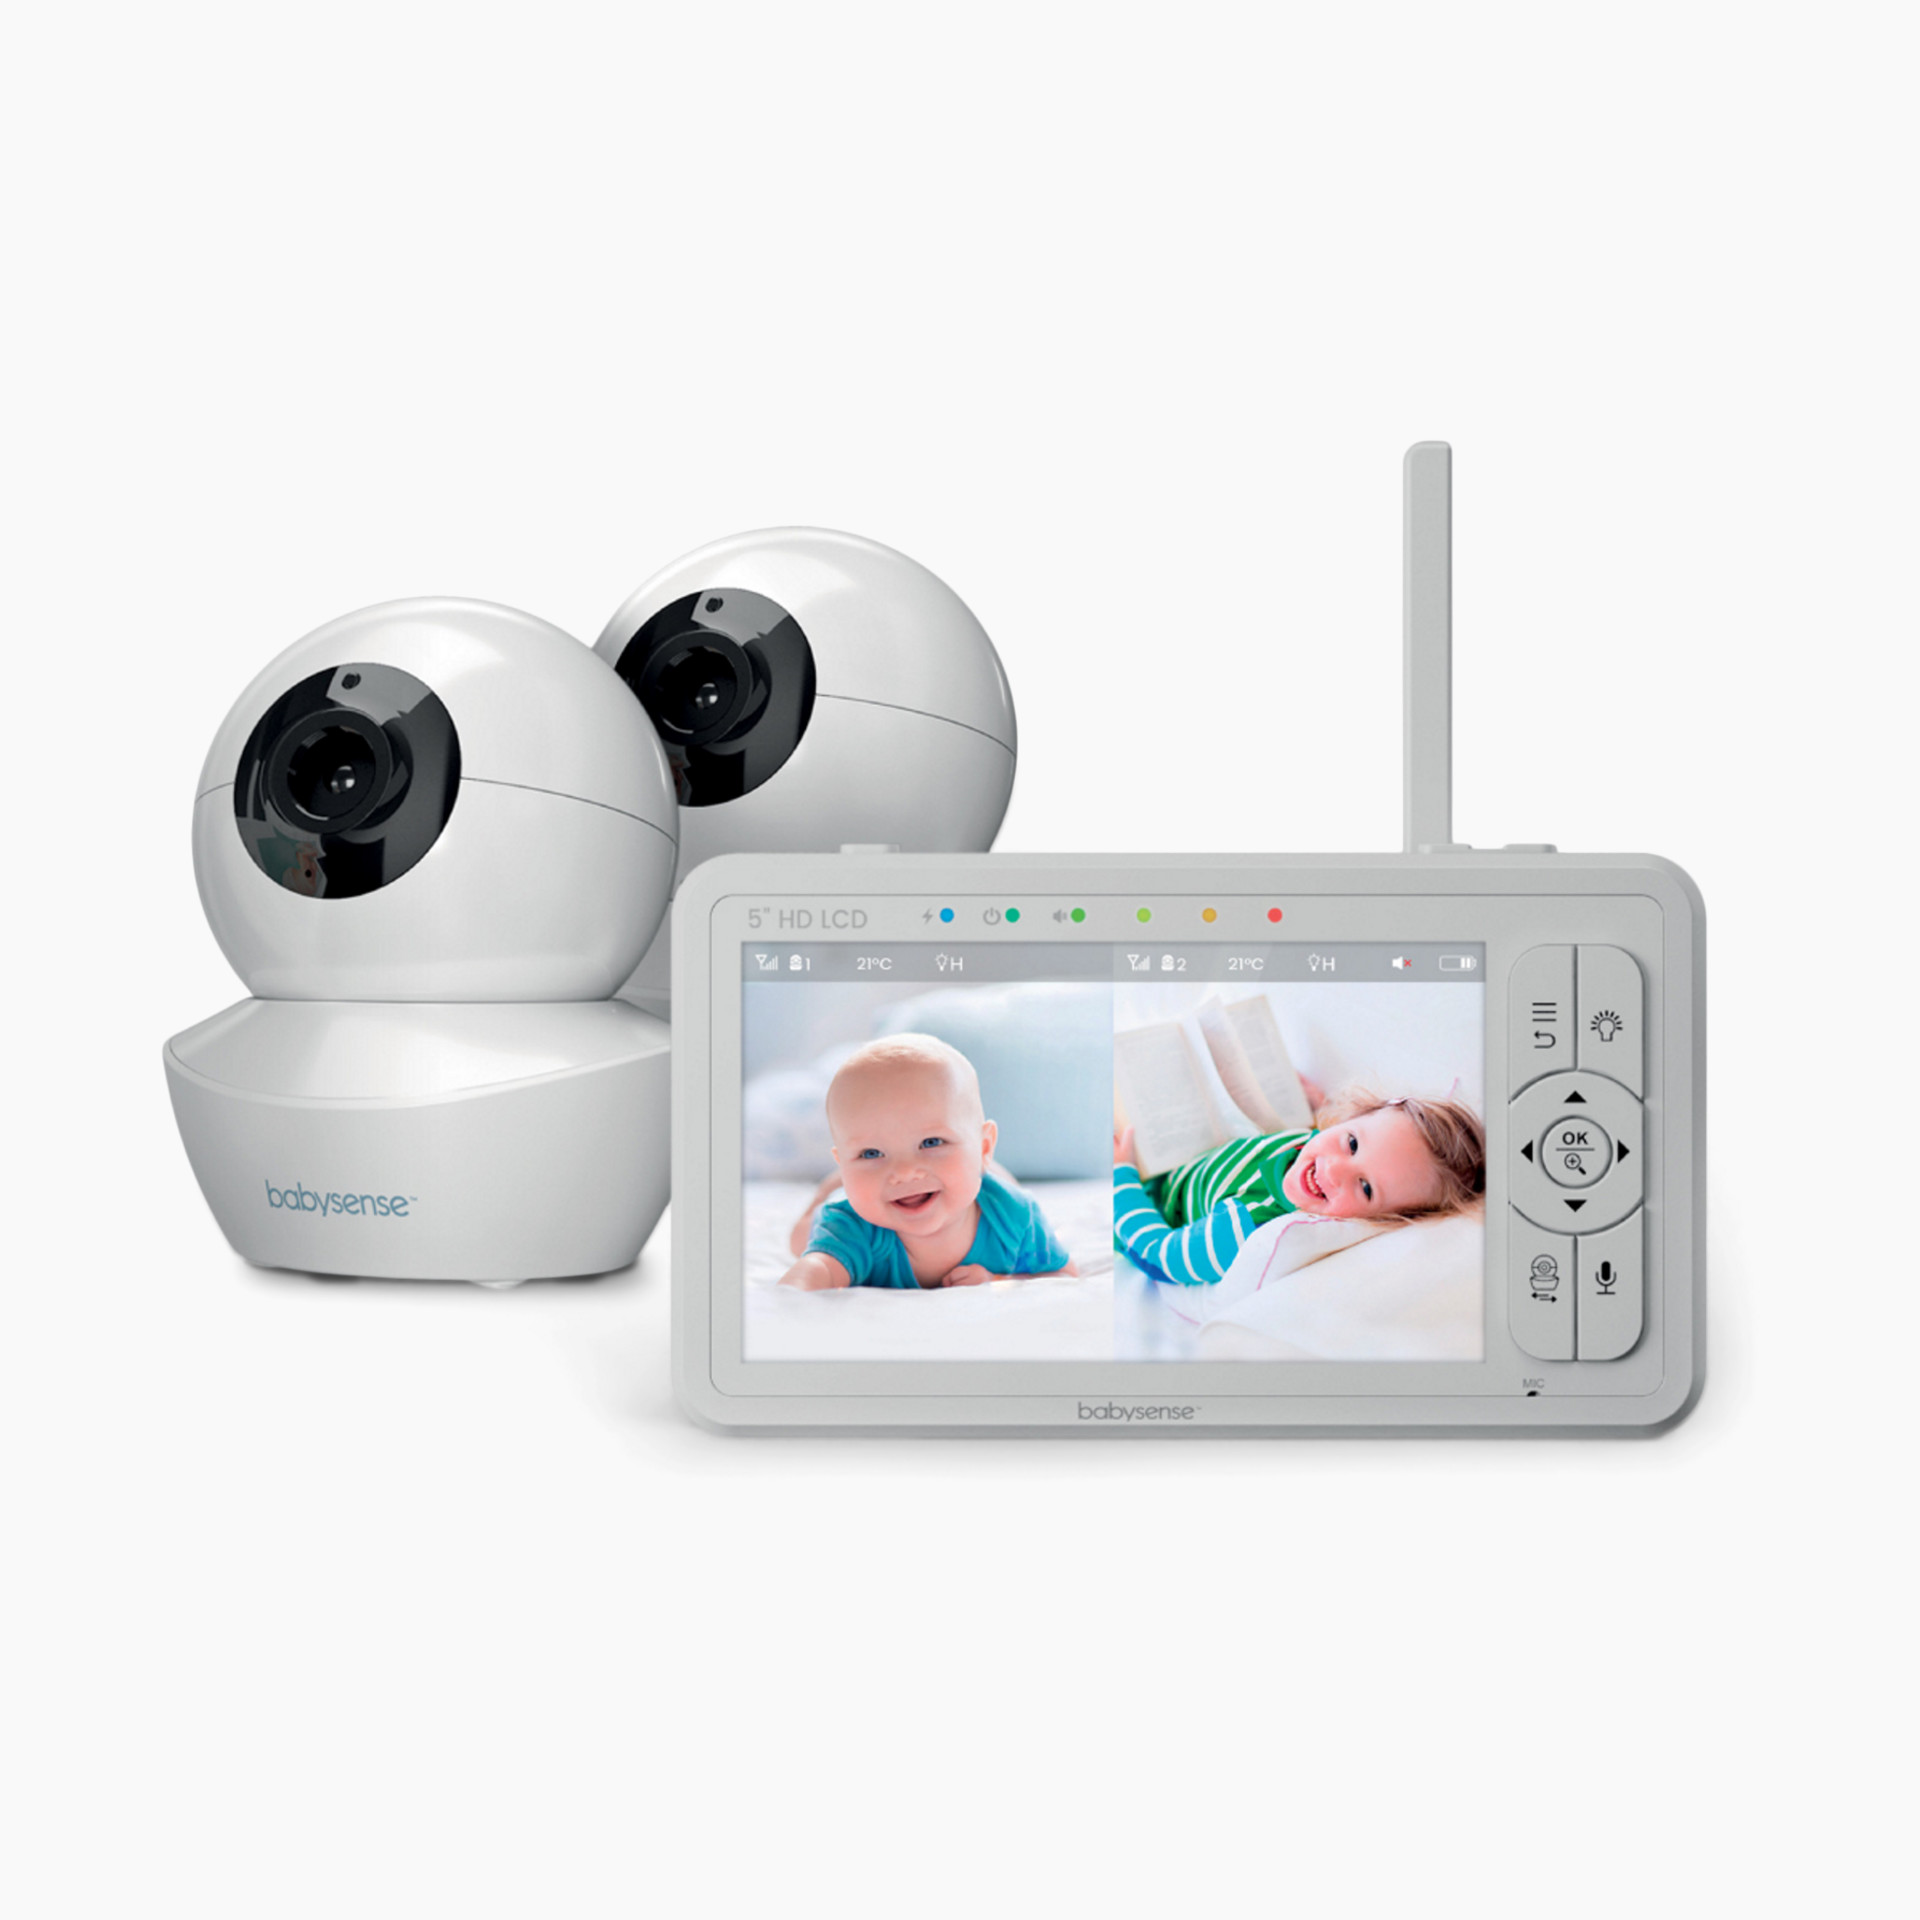 BabySense Babysense Baby Monitor - 720P 5â€ HD Display, Video